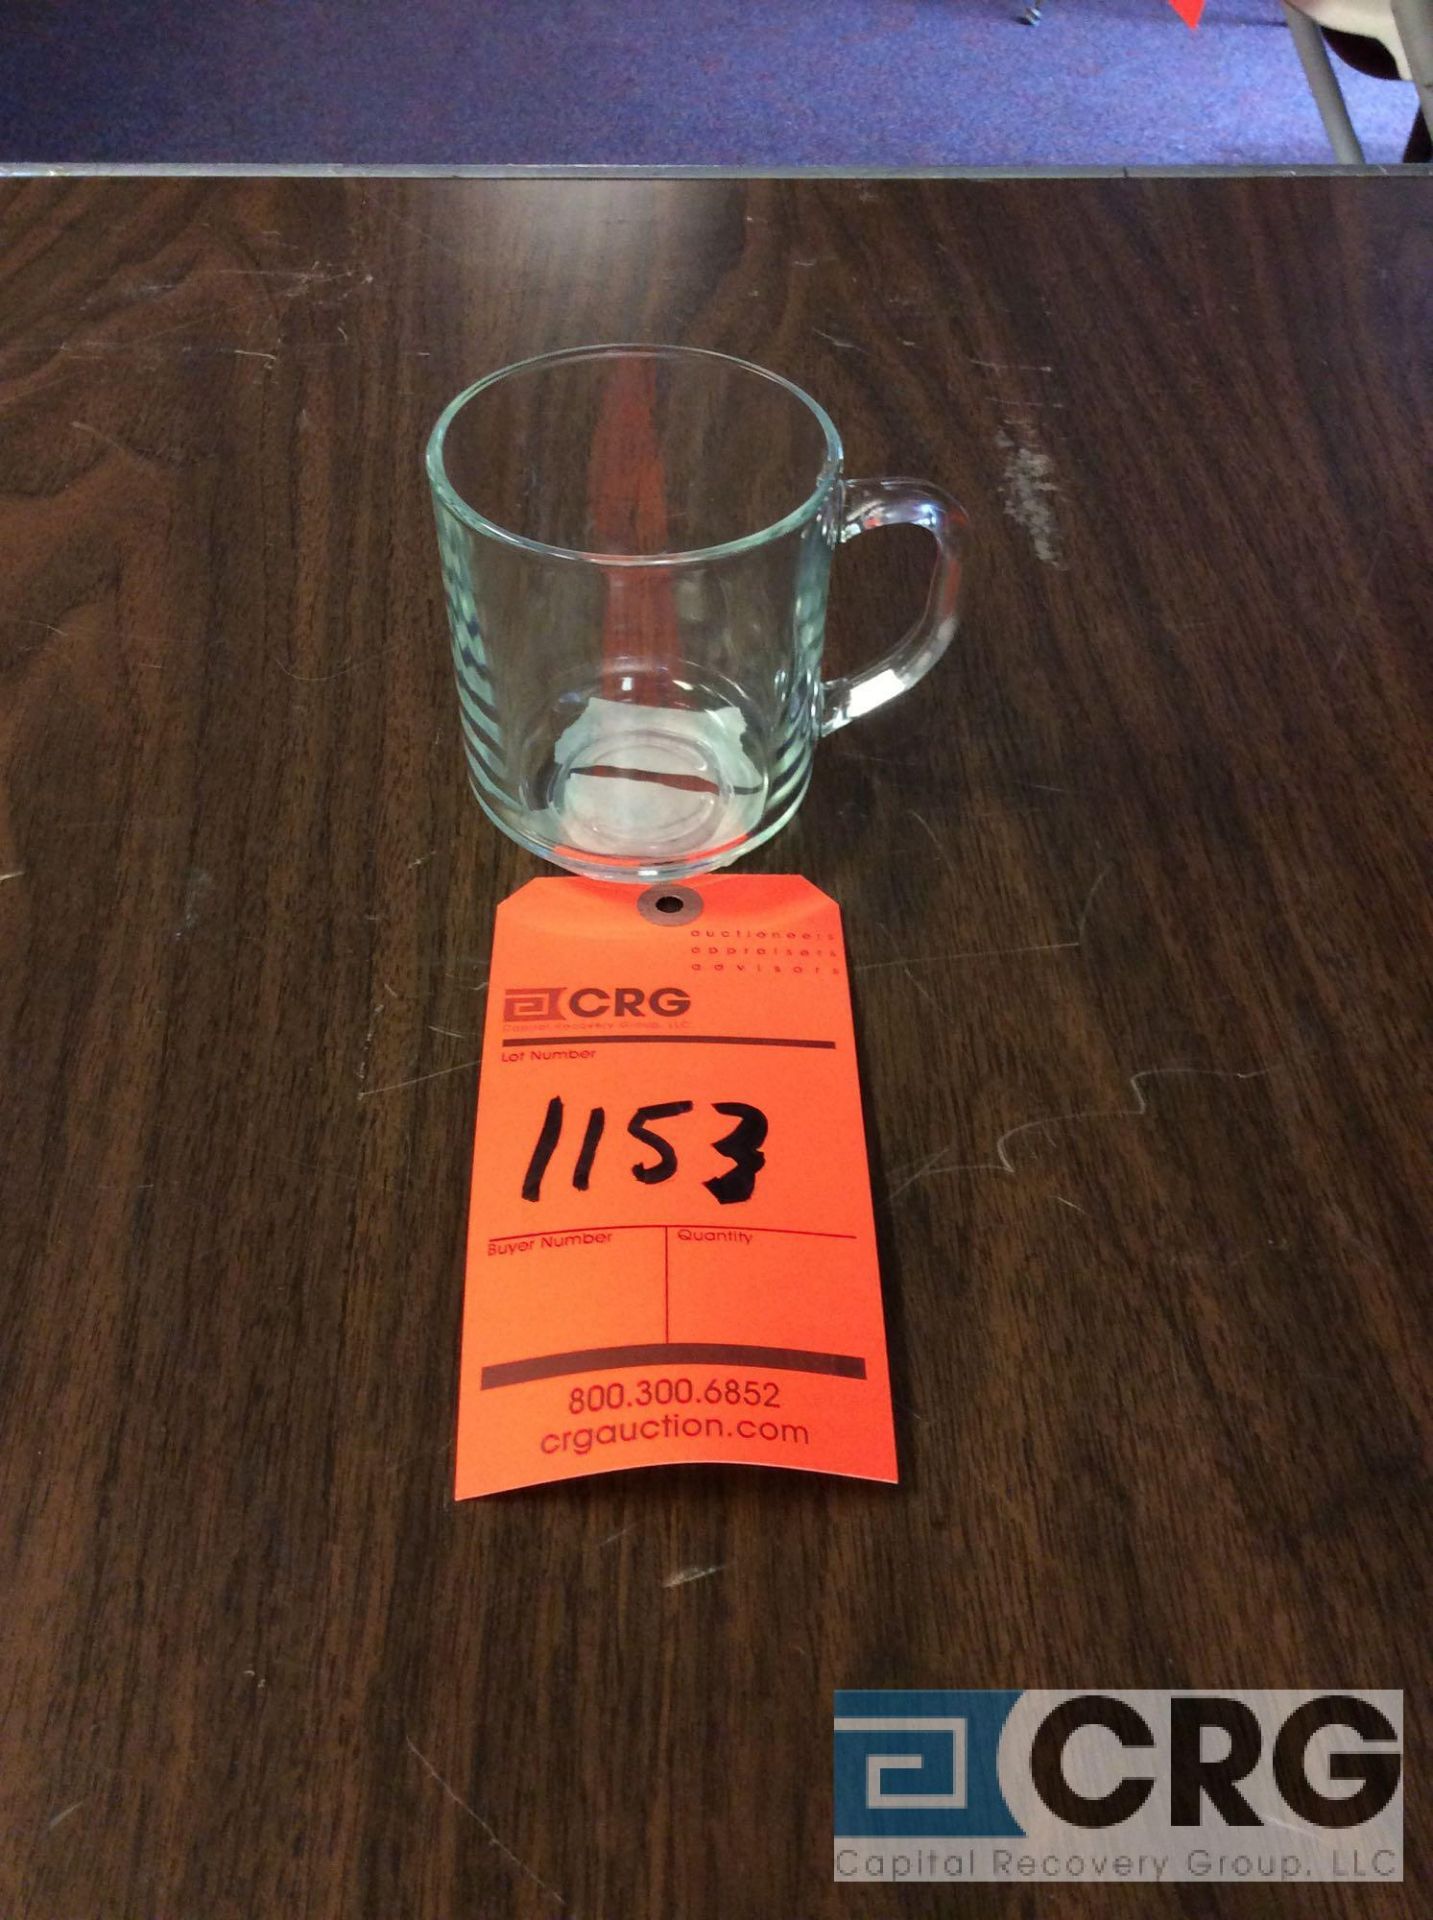 Lot of (276) 10 oz. clear coffee mugs, with (14) racks, add'l $5 fee per rack